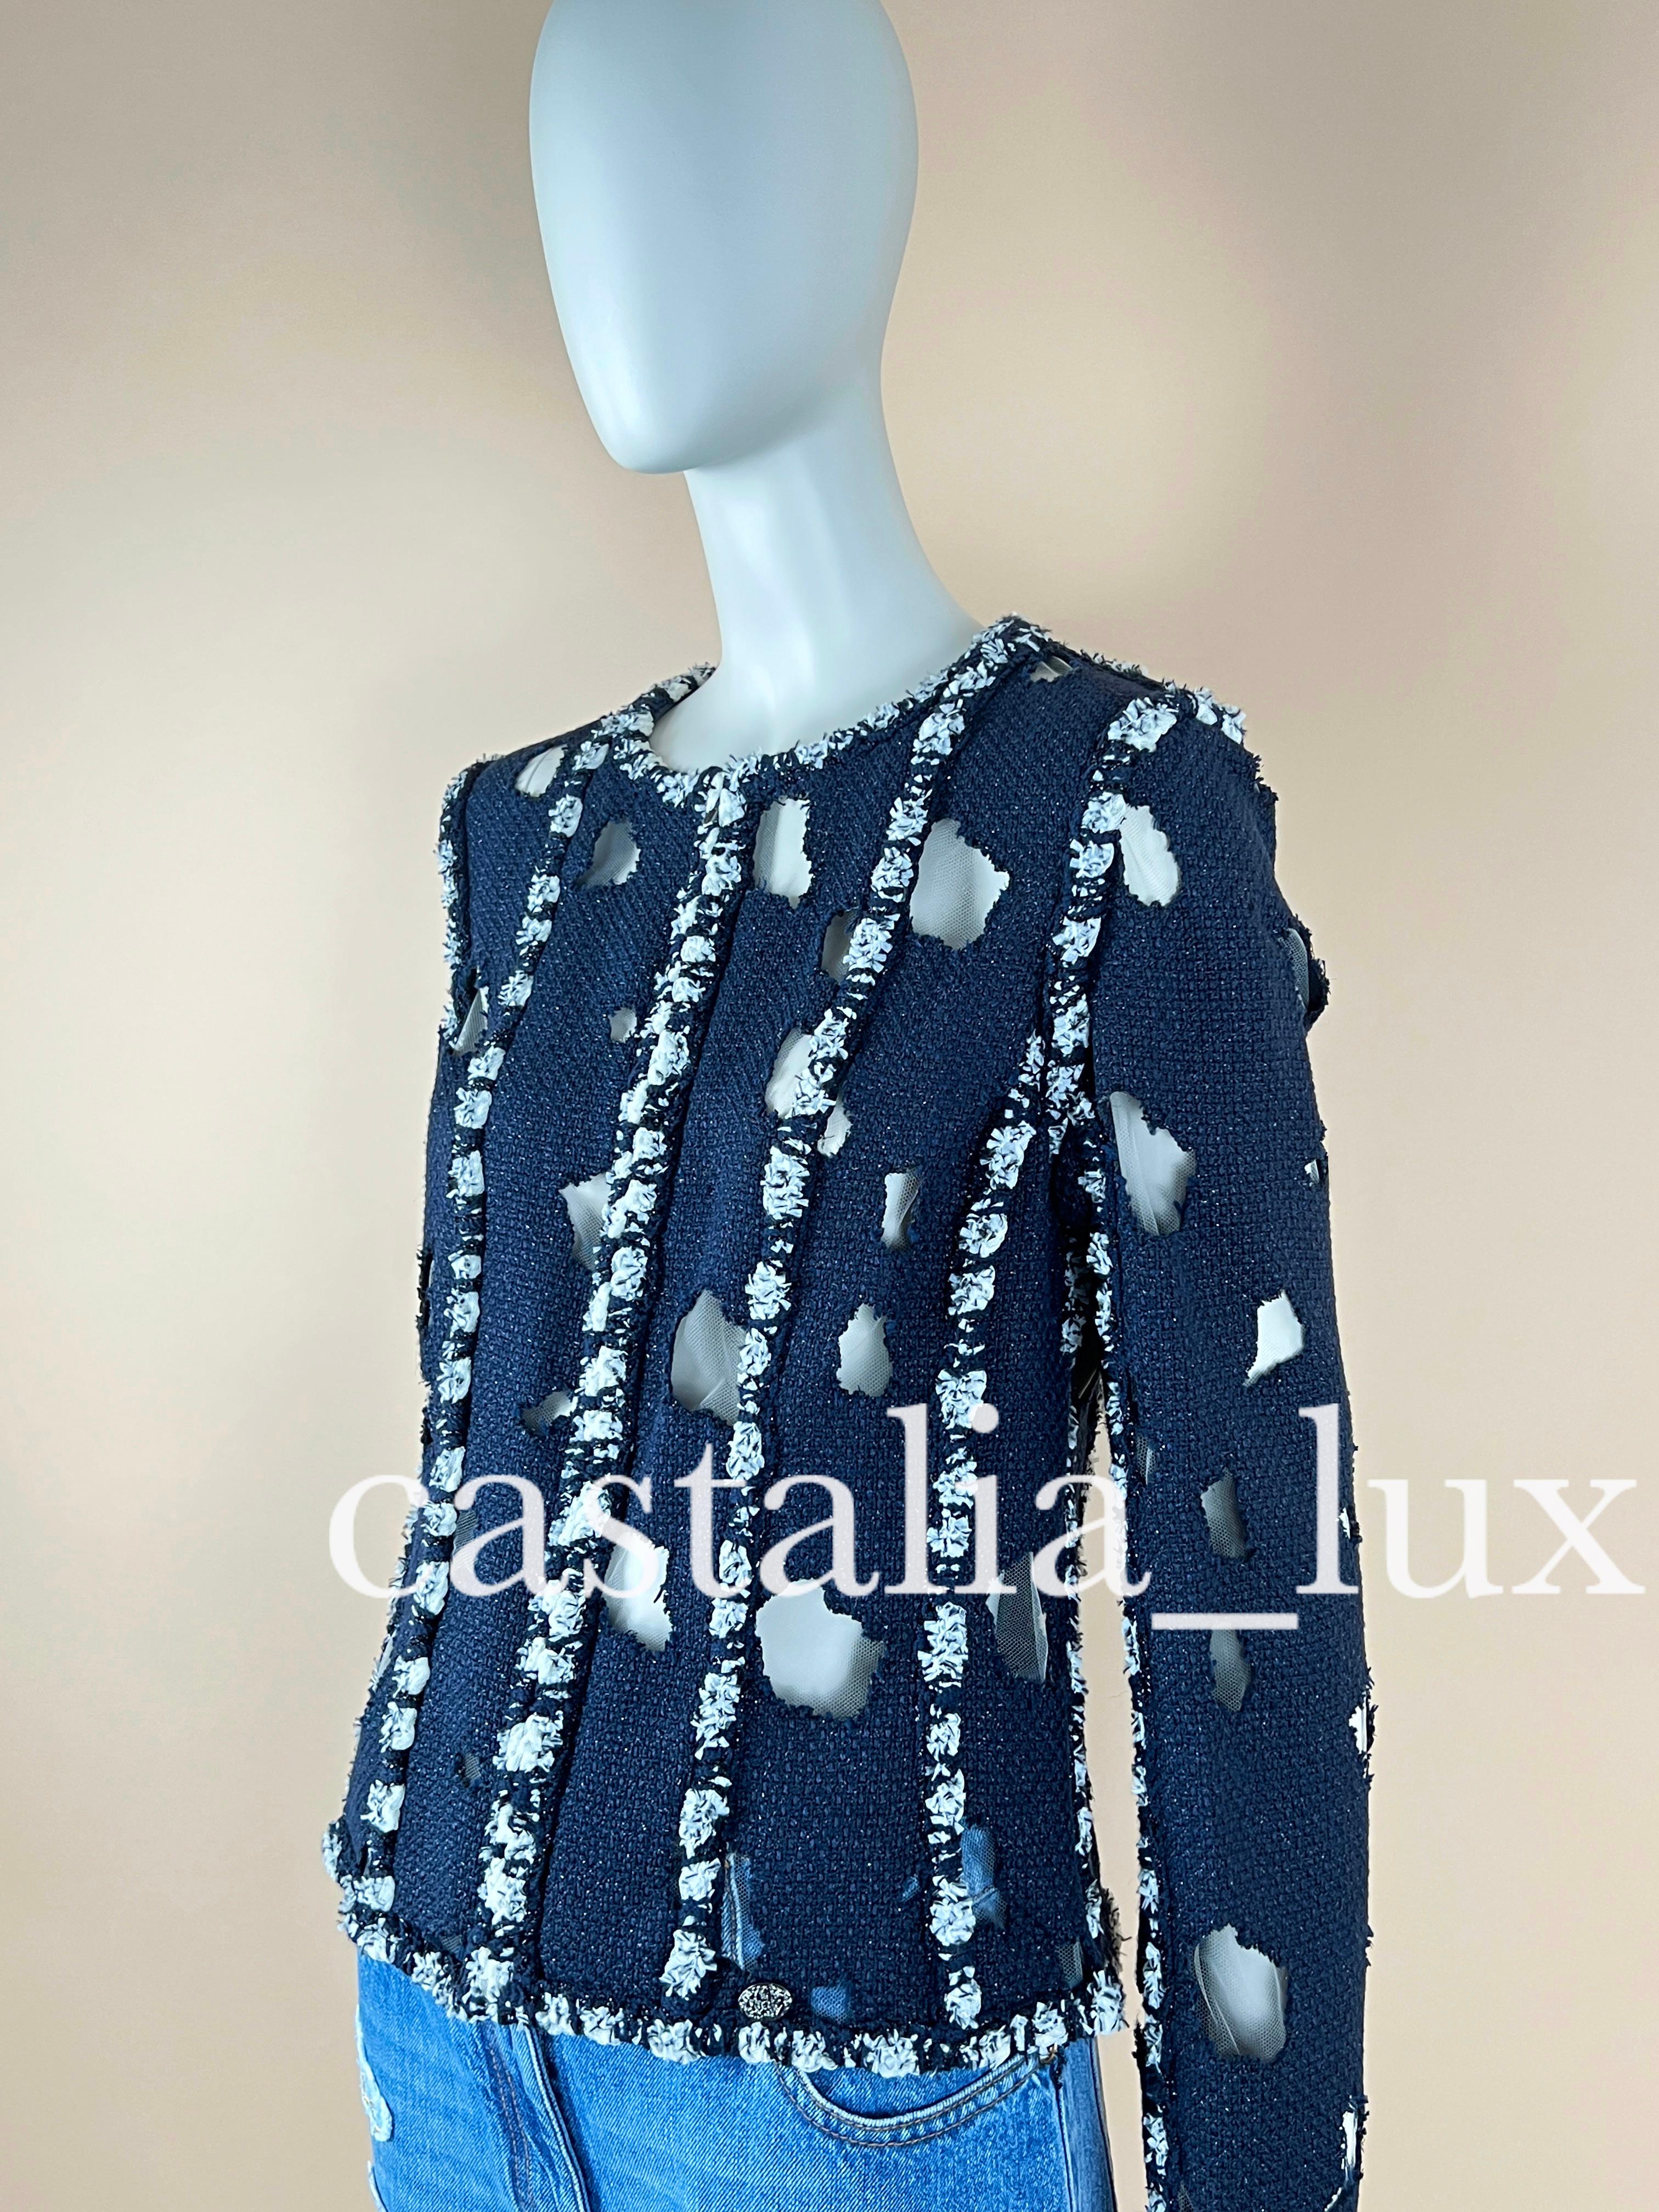 Chanel Iconic Metropolitan Museum Tweed Jacket For Sale 9